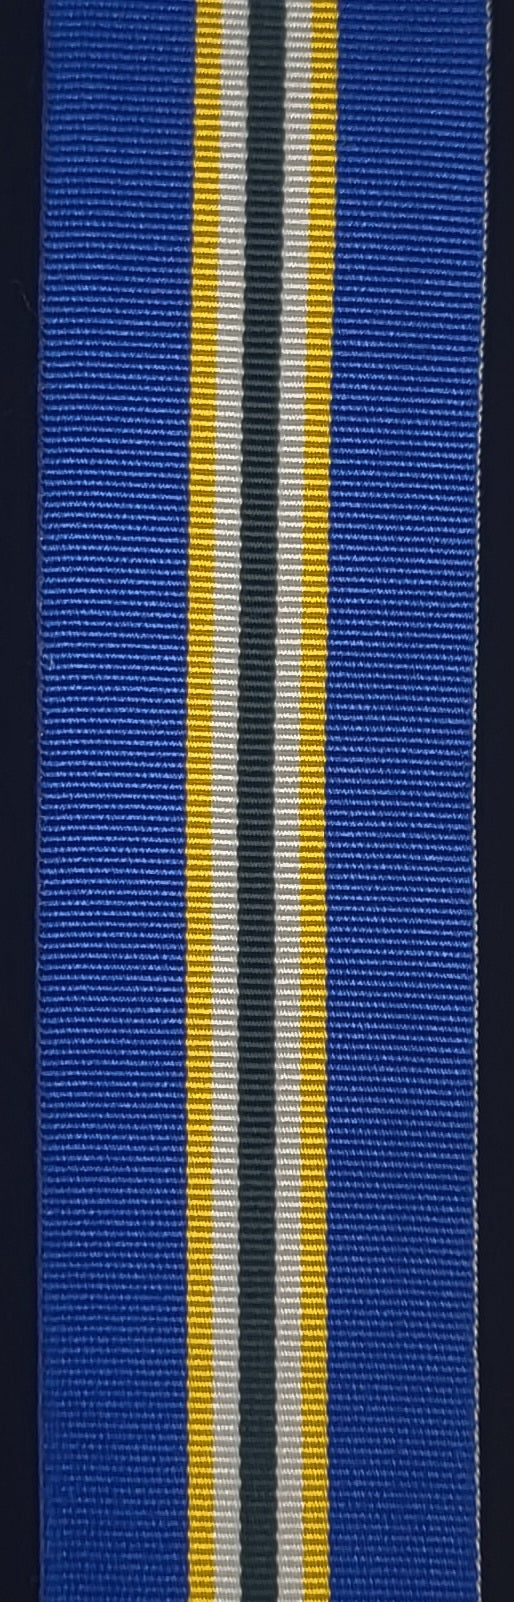 Ribbon,  Canadian Sea Cadet Service Medal